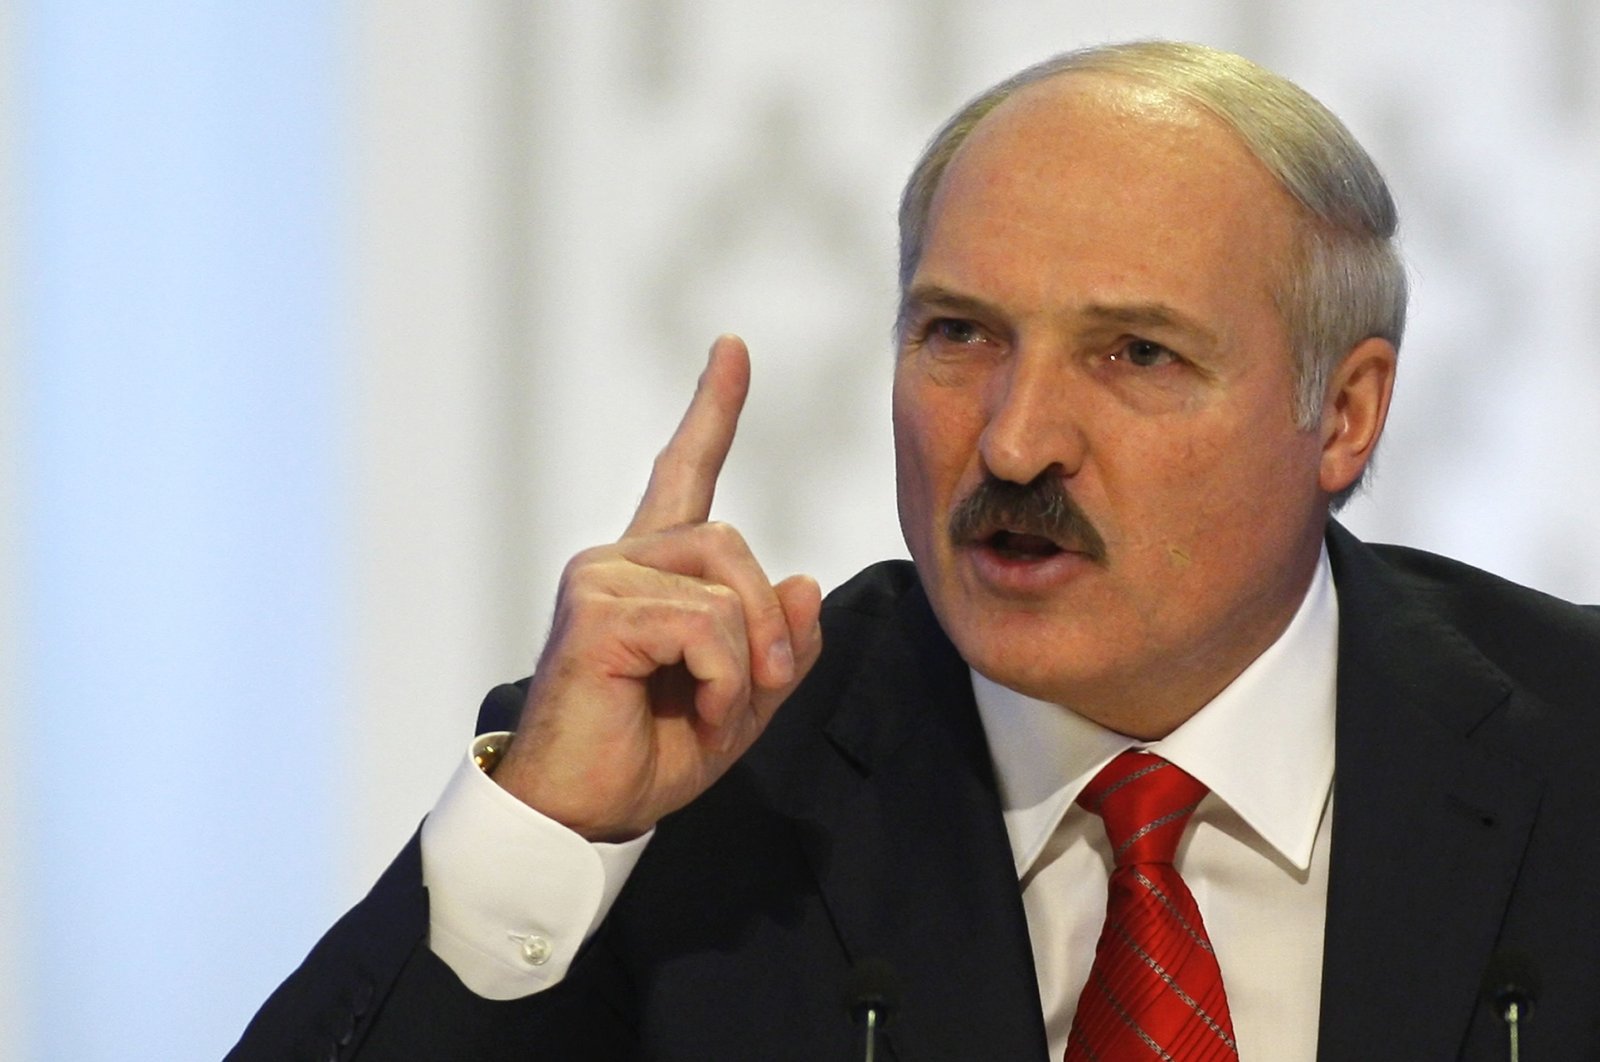 Belarusian President Alexander Lukashenko gestures prior to a news conference in the capital, Minsk, Belarus, Dec. 20, 2010. (AP Photo)